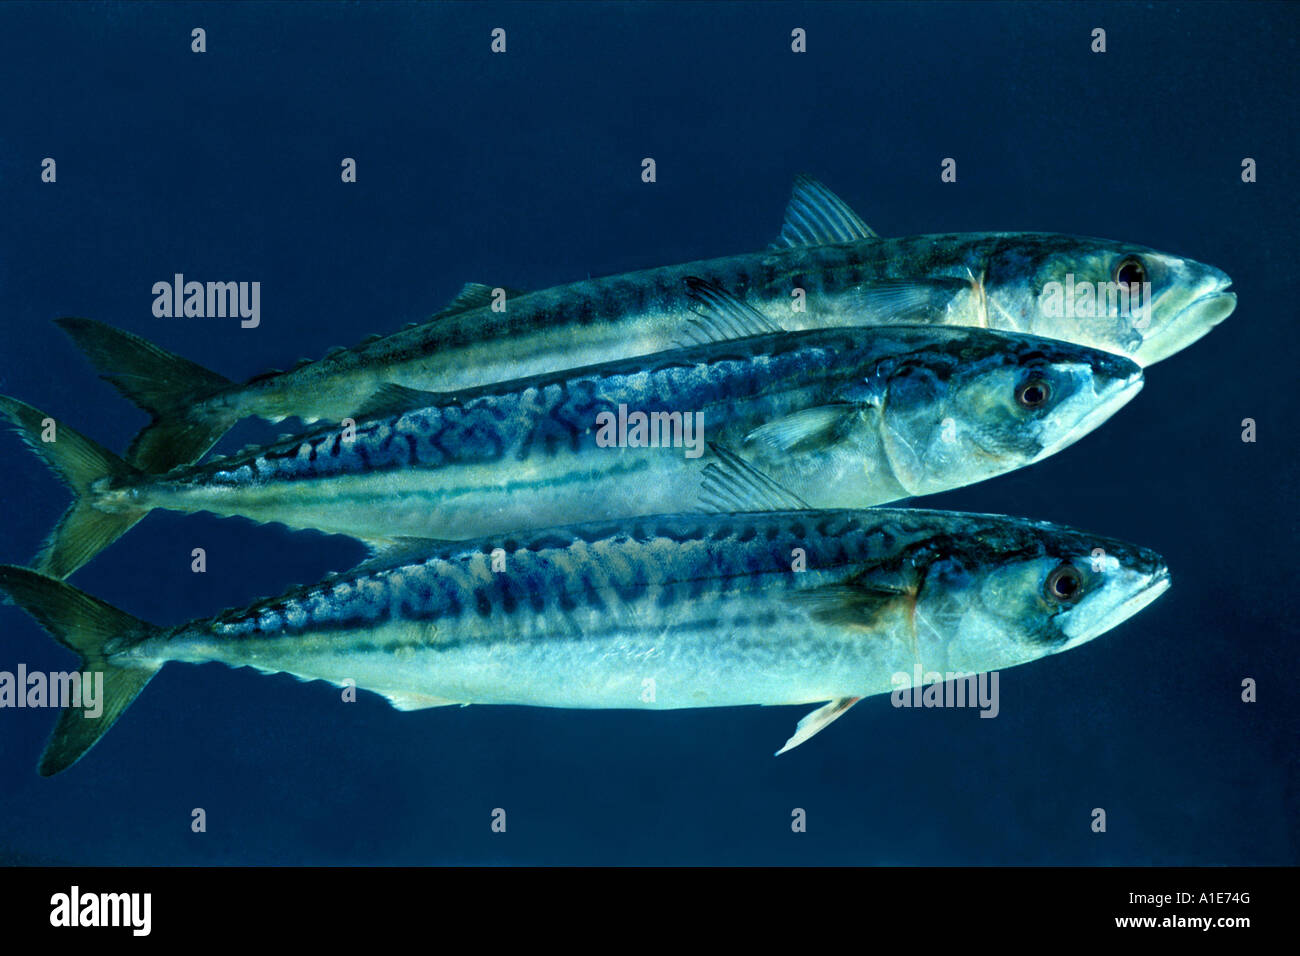 Atlantic mackerel, common mackerel (Scomber scombrus), three individuals, side by side Stock Photo